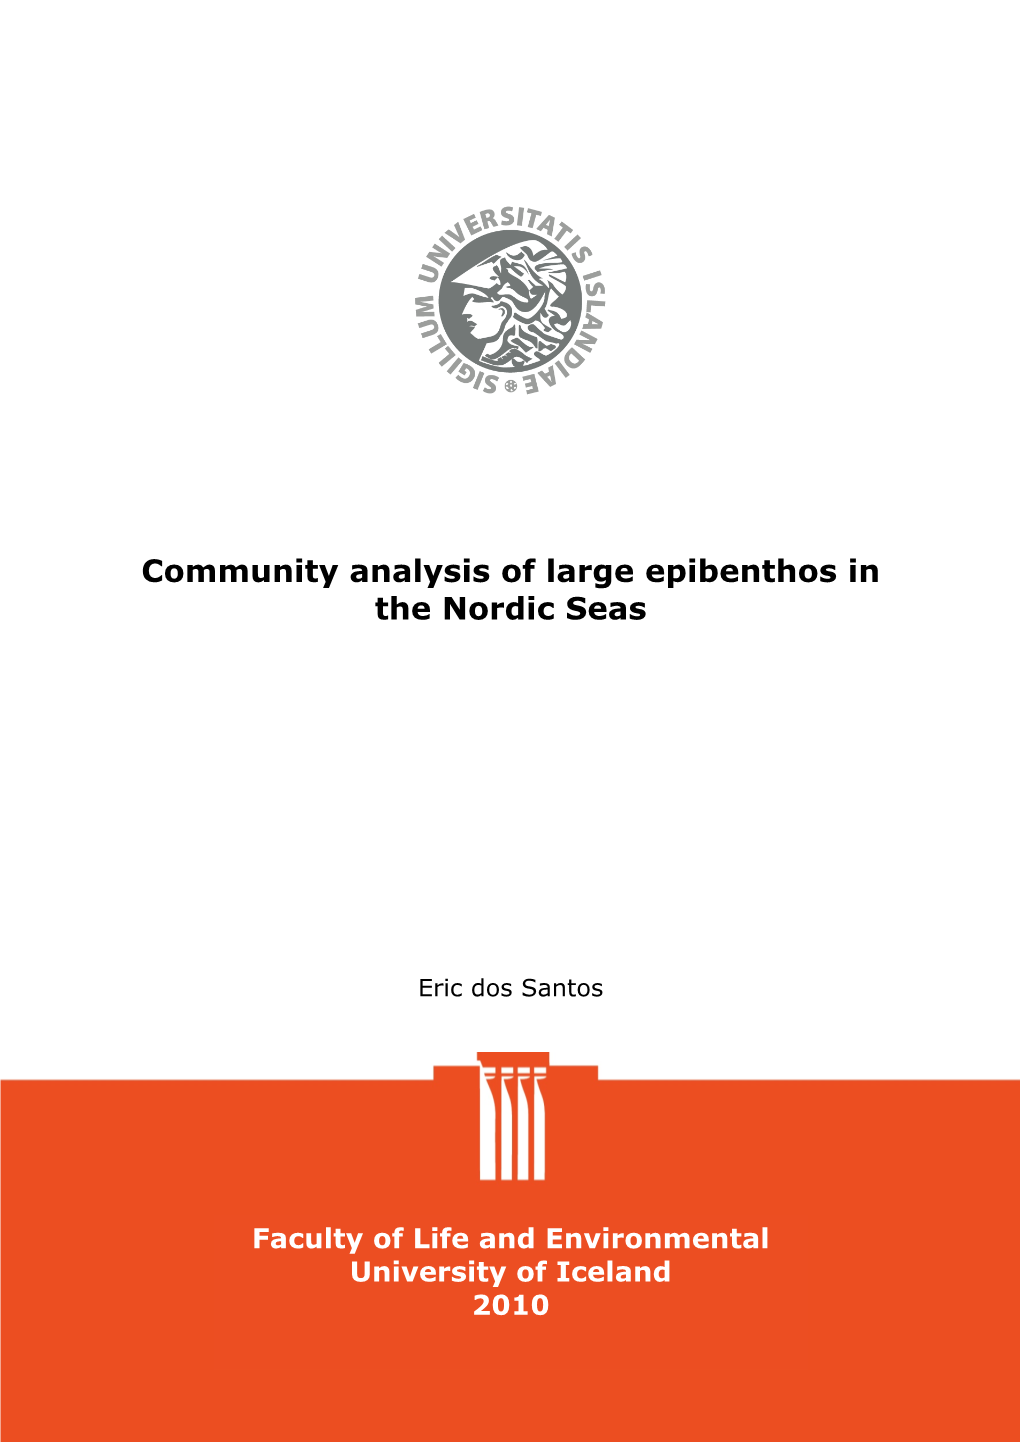 Community Analysis of Large Epibenthos in the Nordic Seas